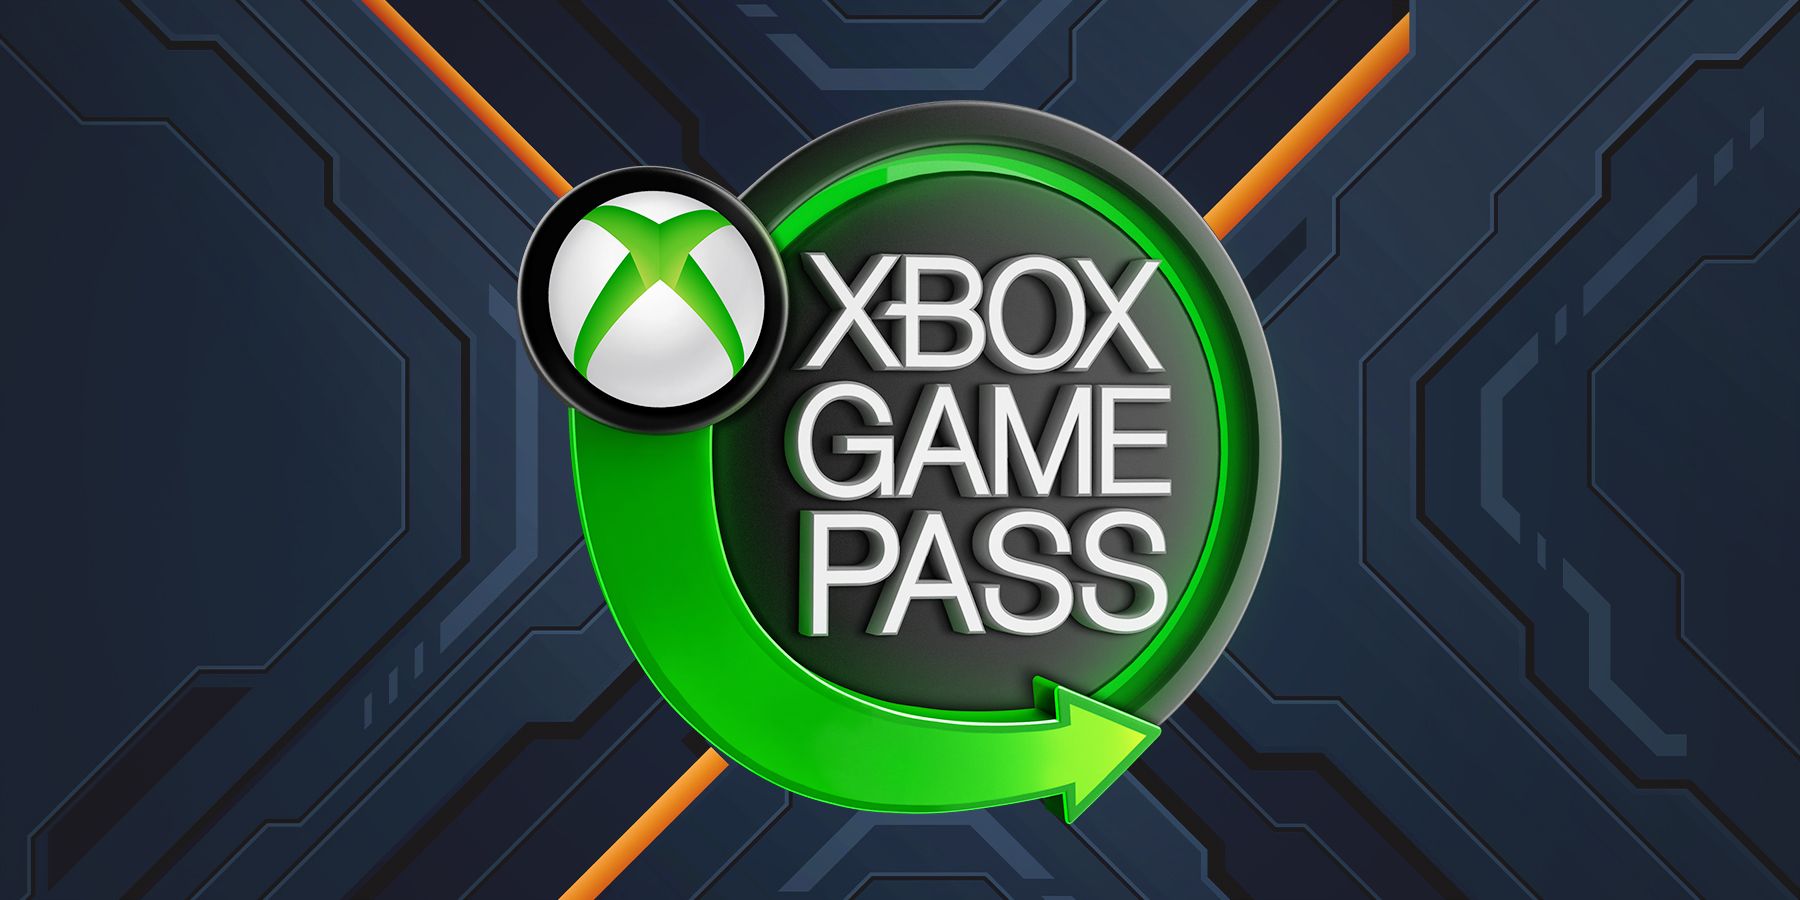 Xbox Game Pass emblem on futuristic tech background